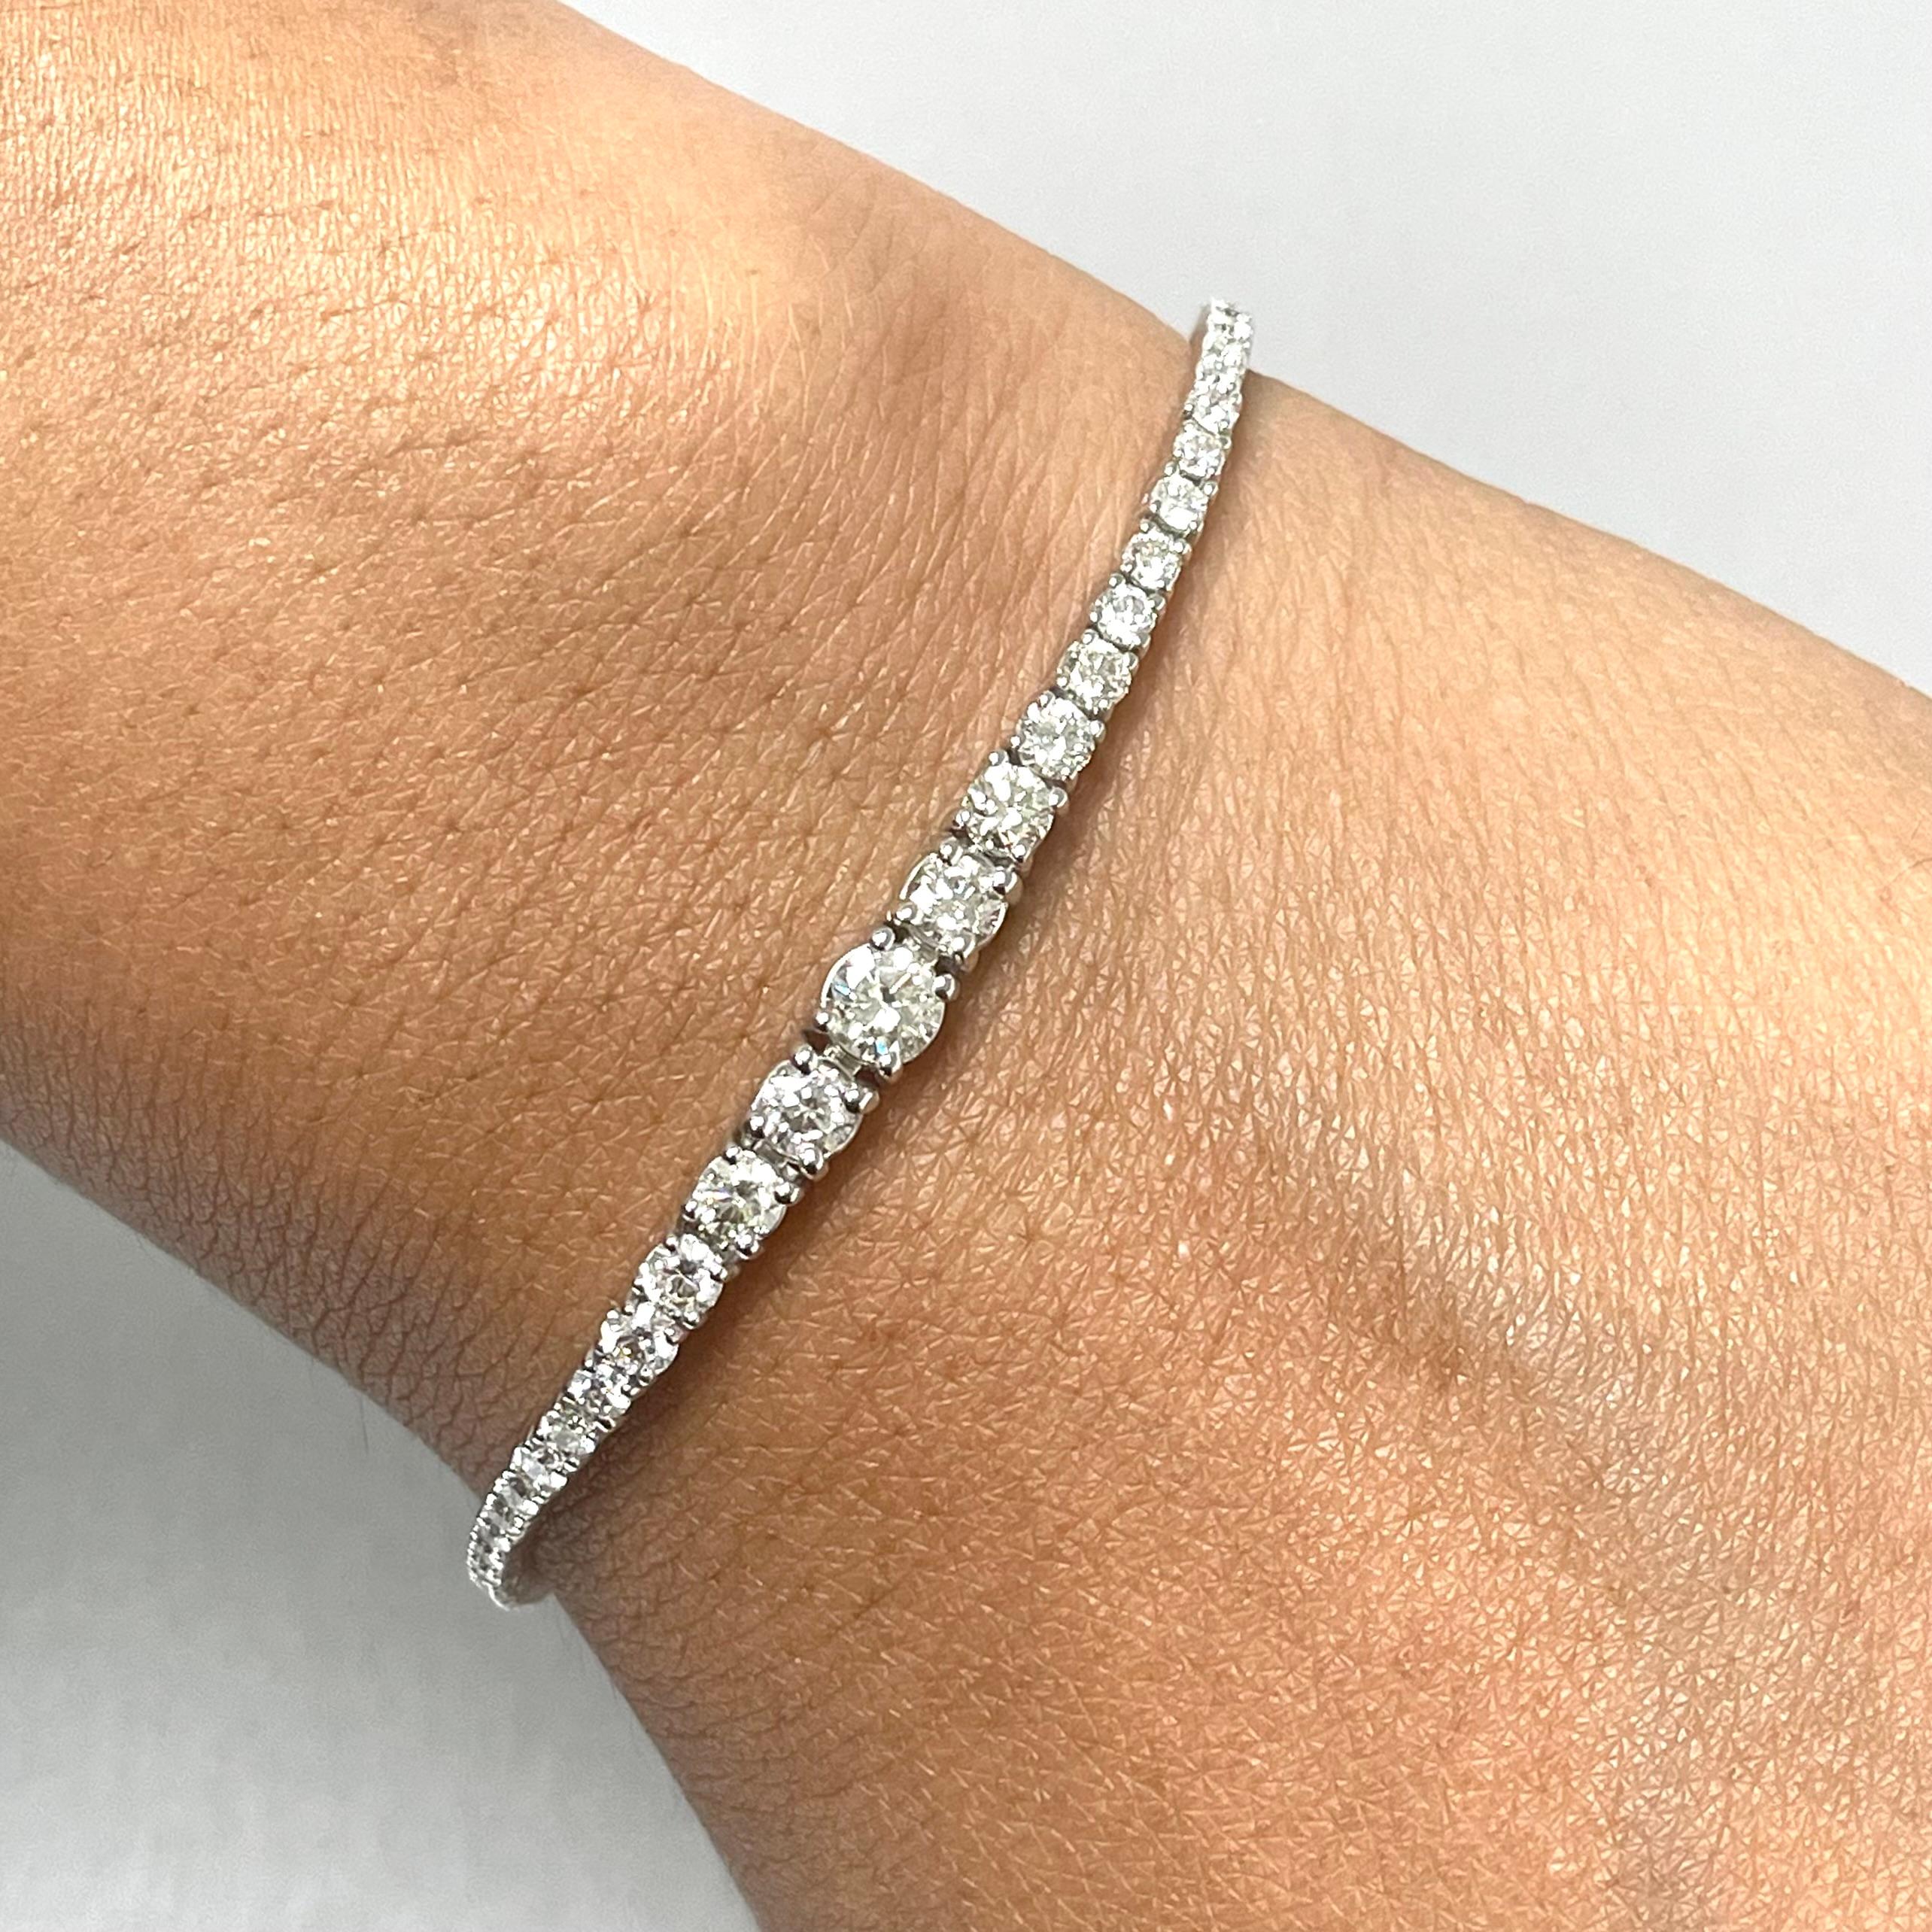 Always a fun accessory, the Bolo bracelet adds sparkles and shine to every look.

Diamonds Shape: Round
Total Diamond Weight: 2.70 ct 
No. of Diamonds: 61 
Diamond Color: H - I 
Diamond Clarity: VVS - VS (Very Very Slightly Included - Very Slightly